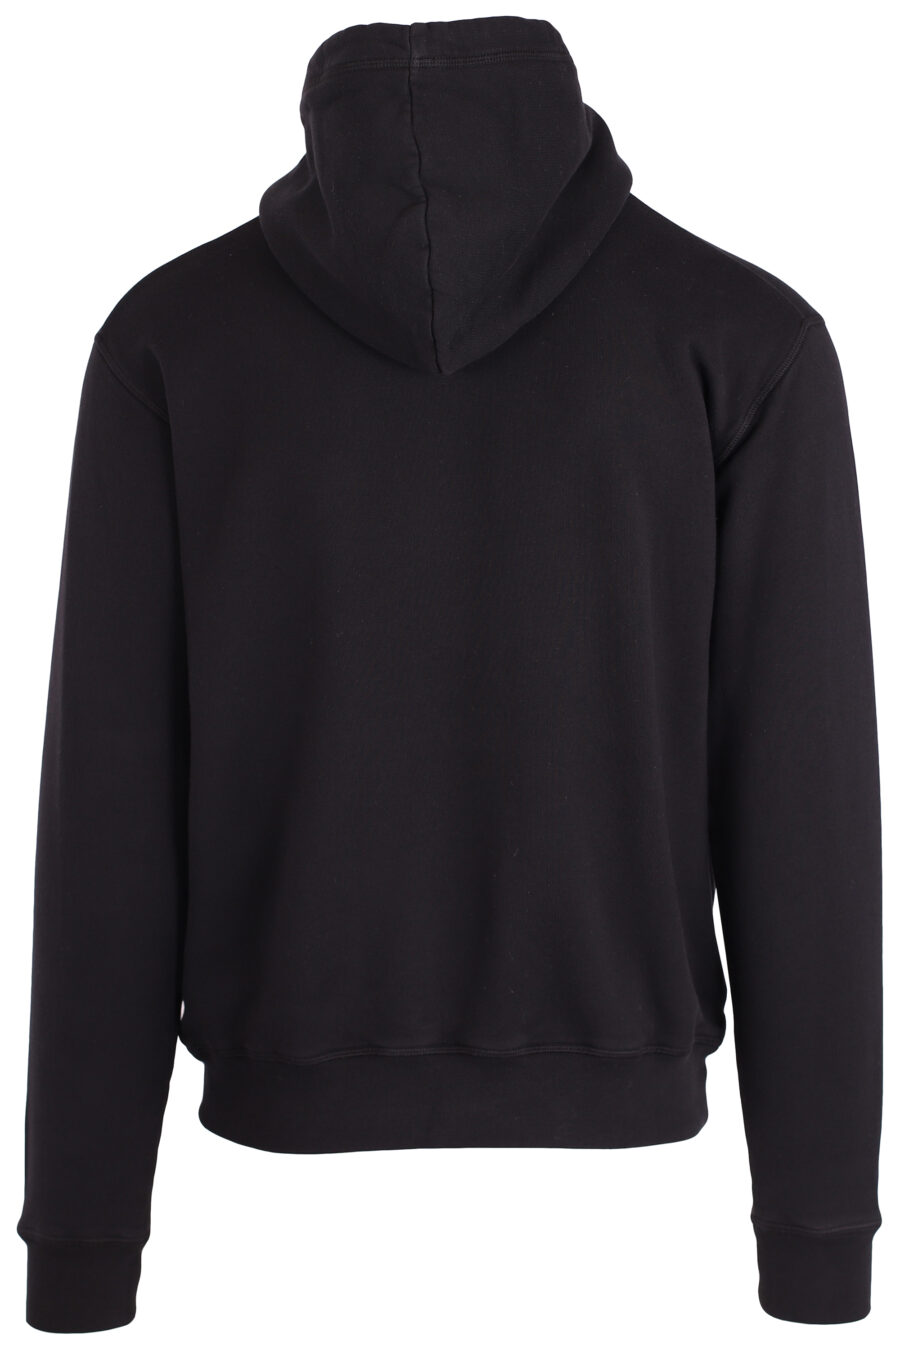 Black hooded sweatshirt with white graphic logo - IMG 3958